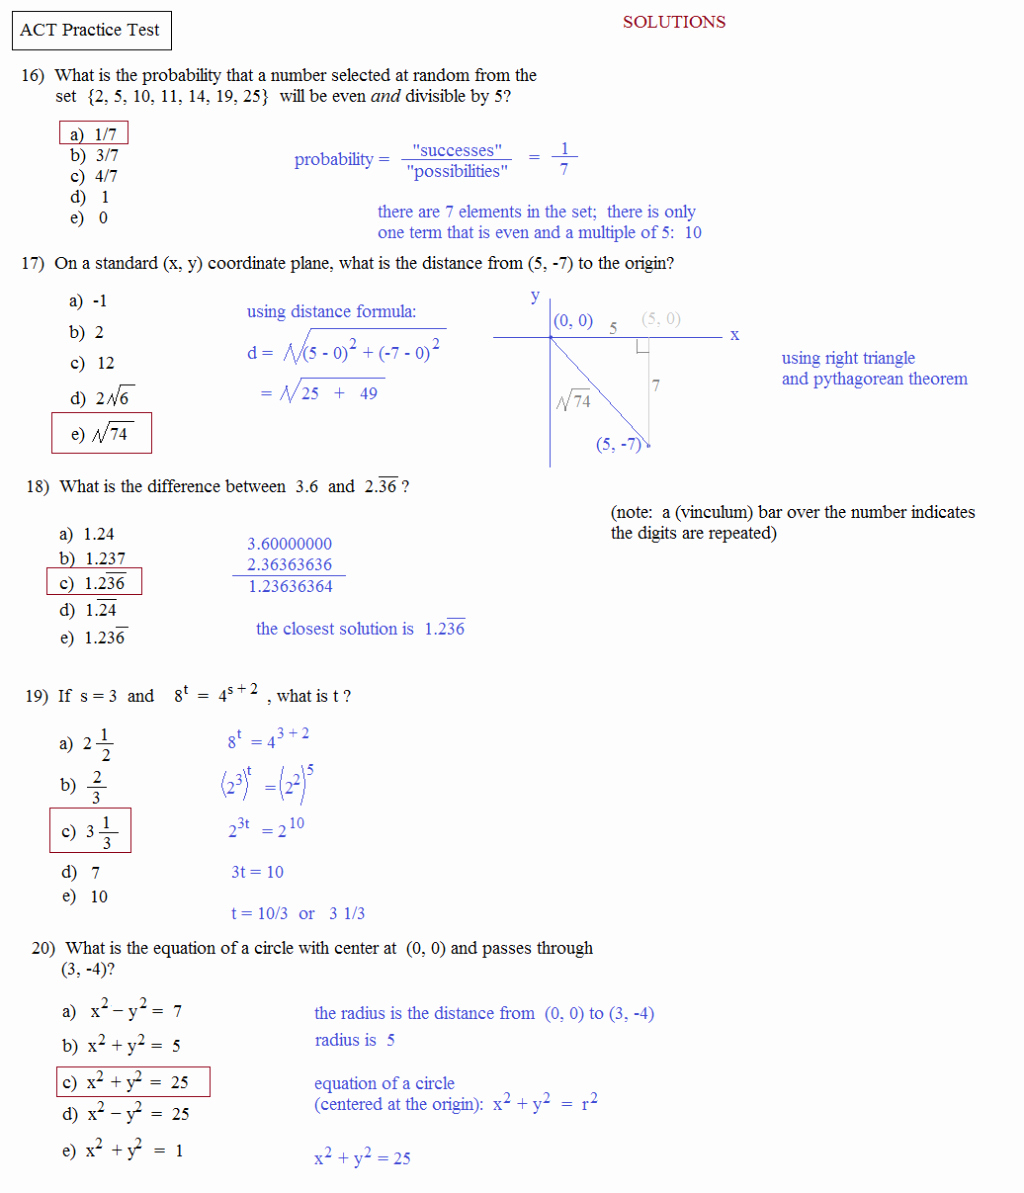 asvab math knowledge worksheet